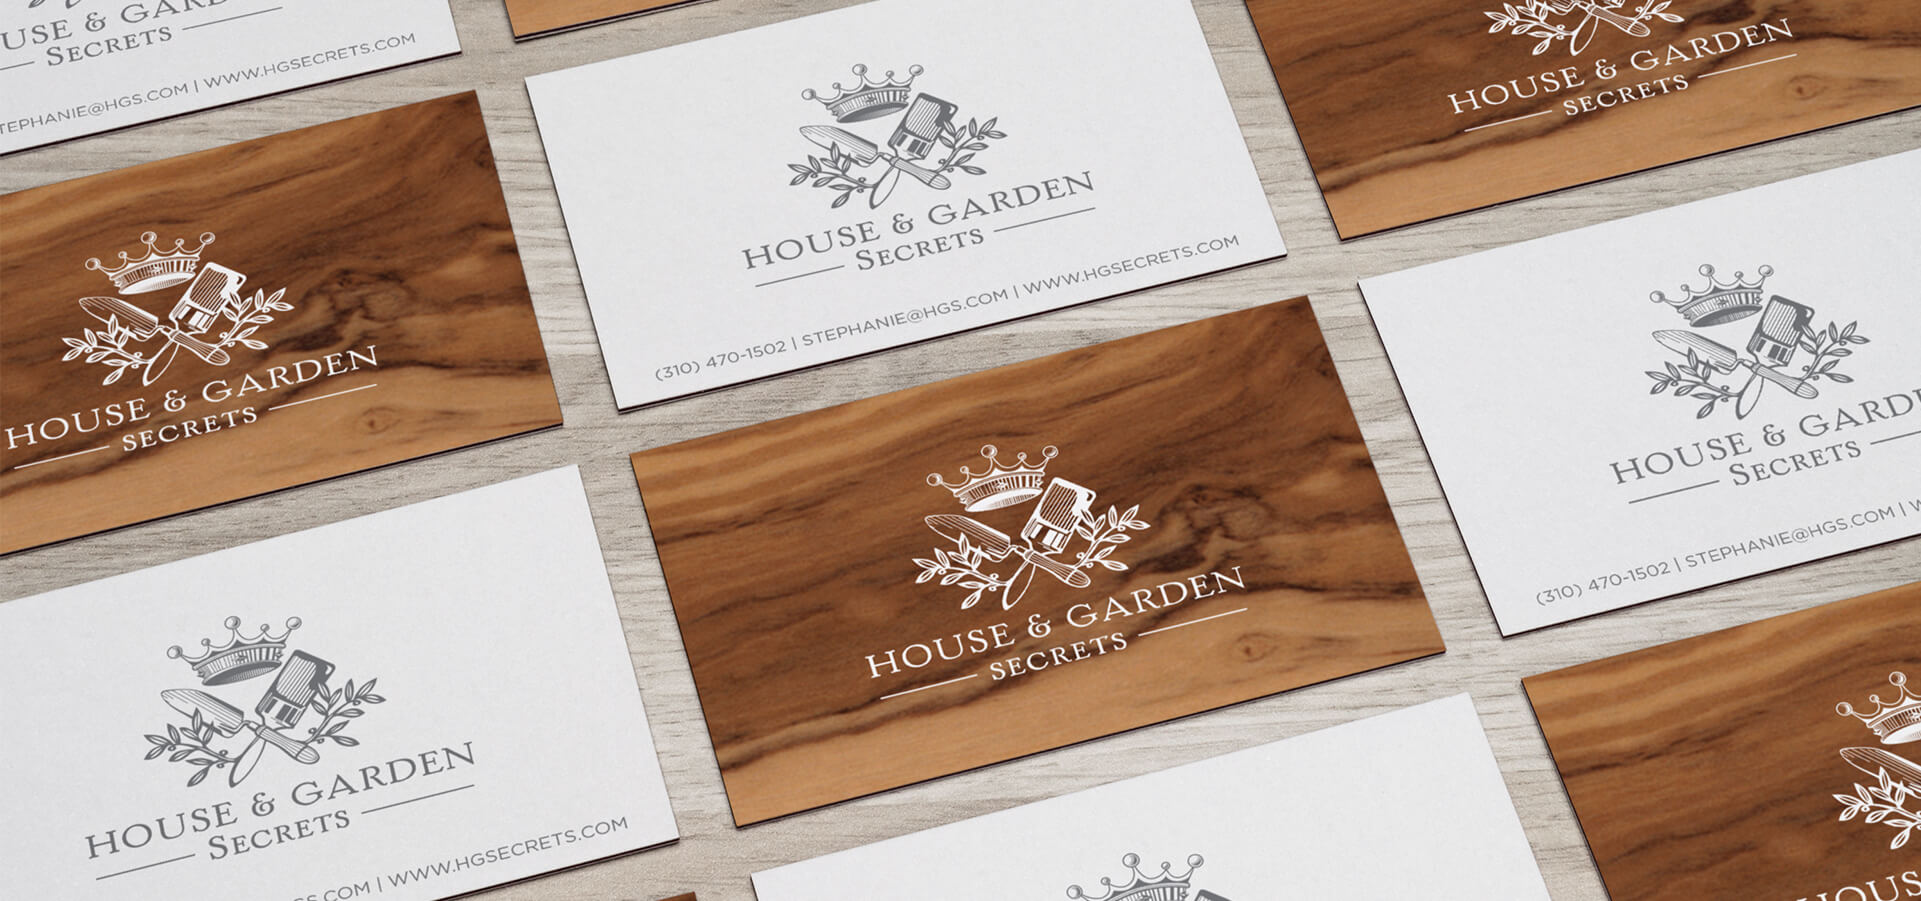 Wood veneer business cards with logo design